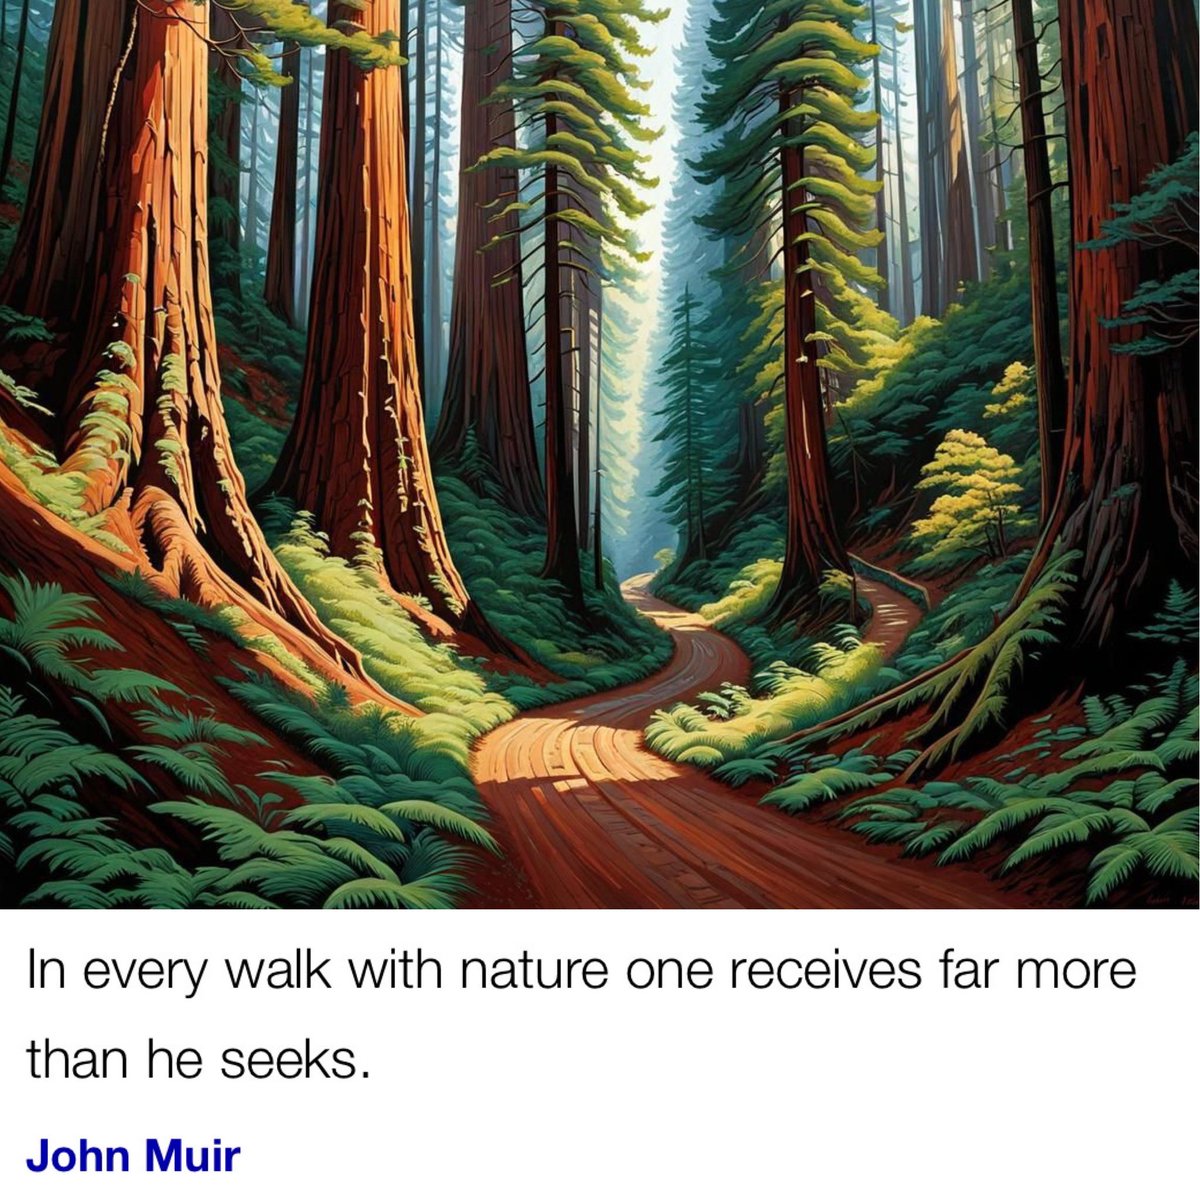 #JohnMuir #Redwoods #Nature #Walking #Meditation #California #RedwoodForest #walkingsports